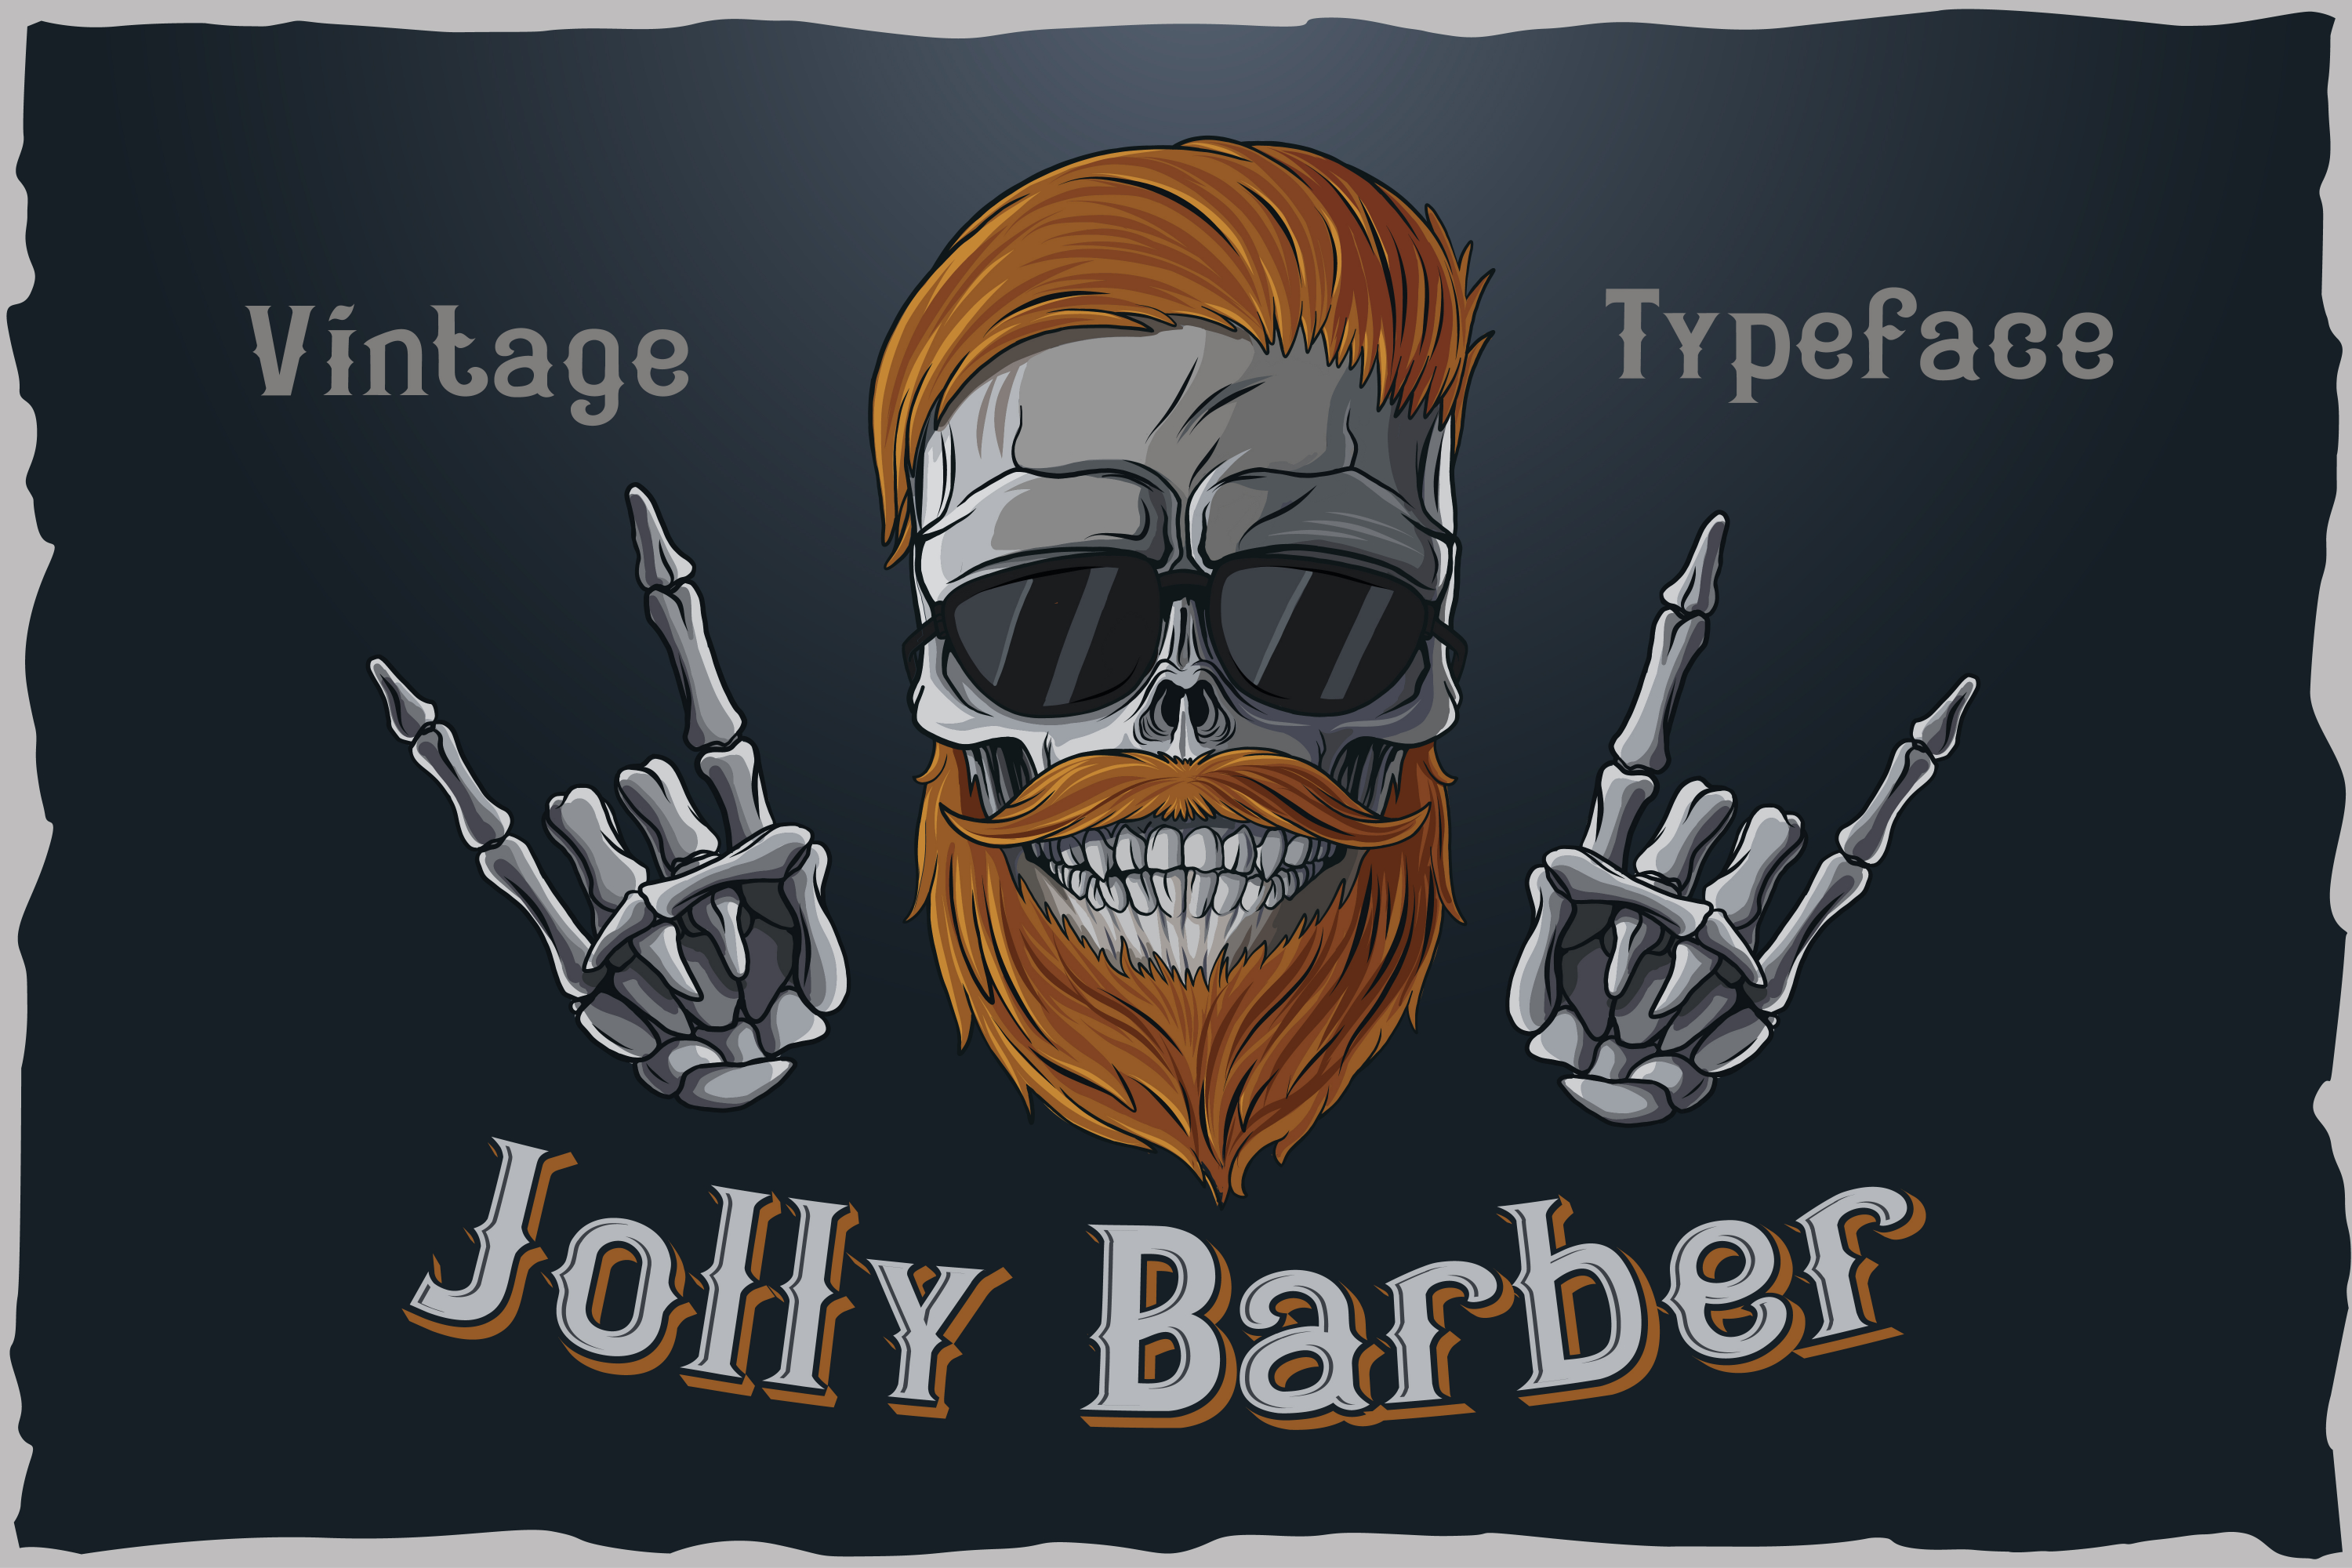 Jolly Barber